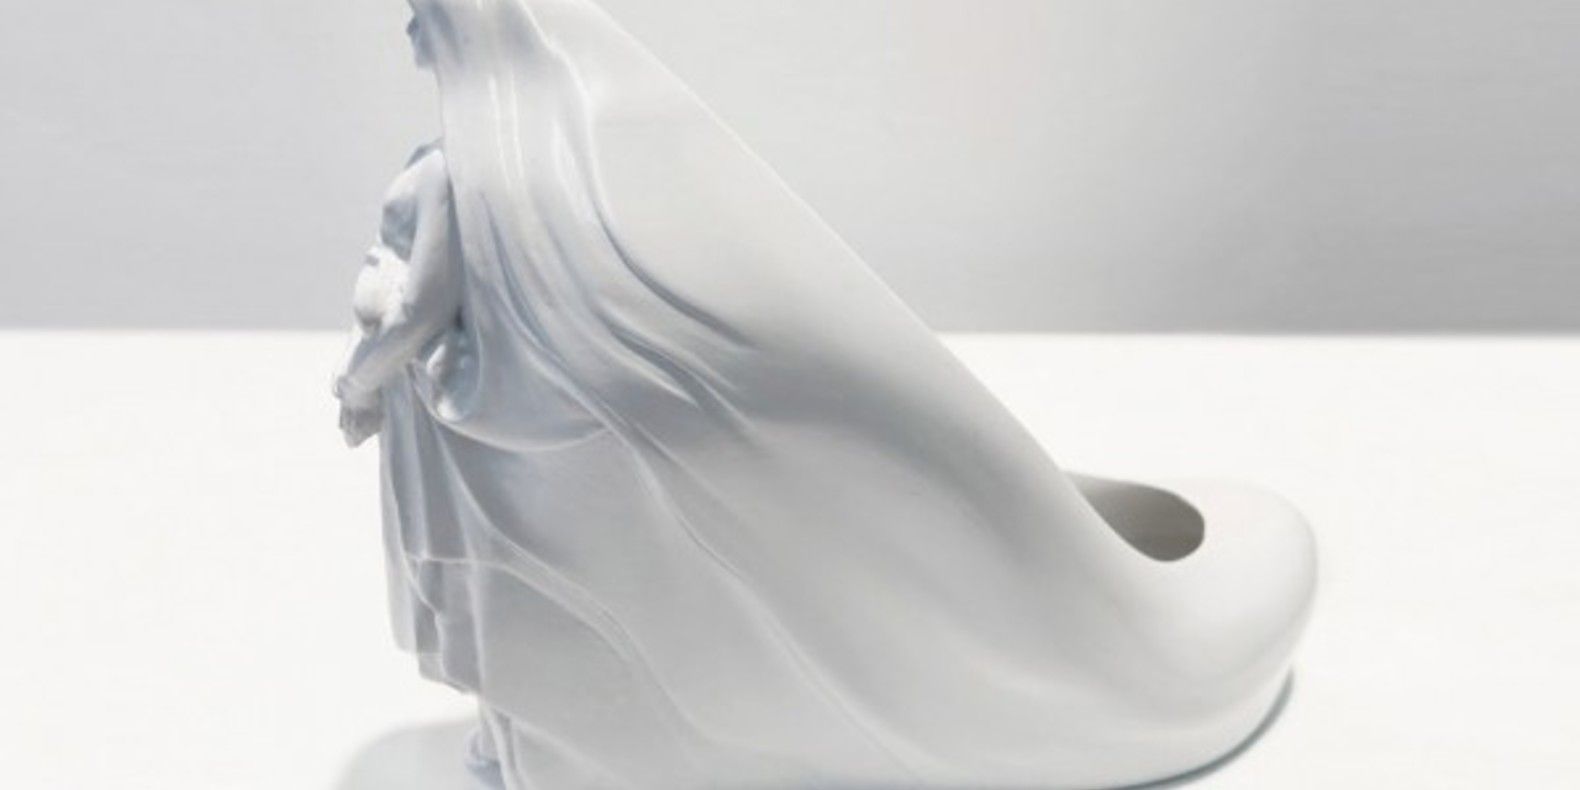 sebastian errazuriz shoe 3D print cults chaussures imprimees en 3D makerbot melissa designer 3D 9